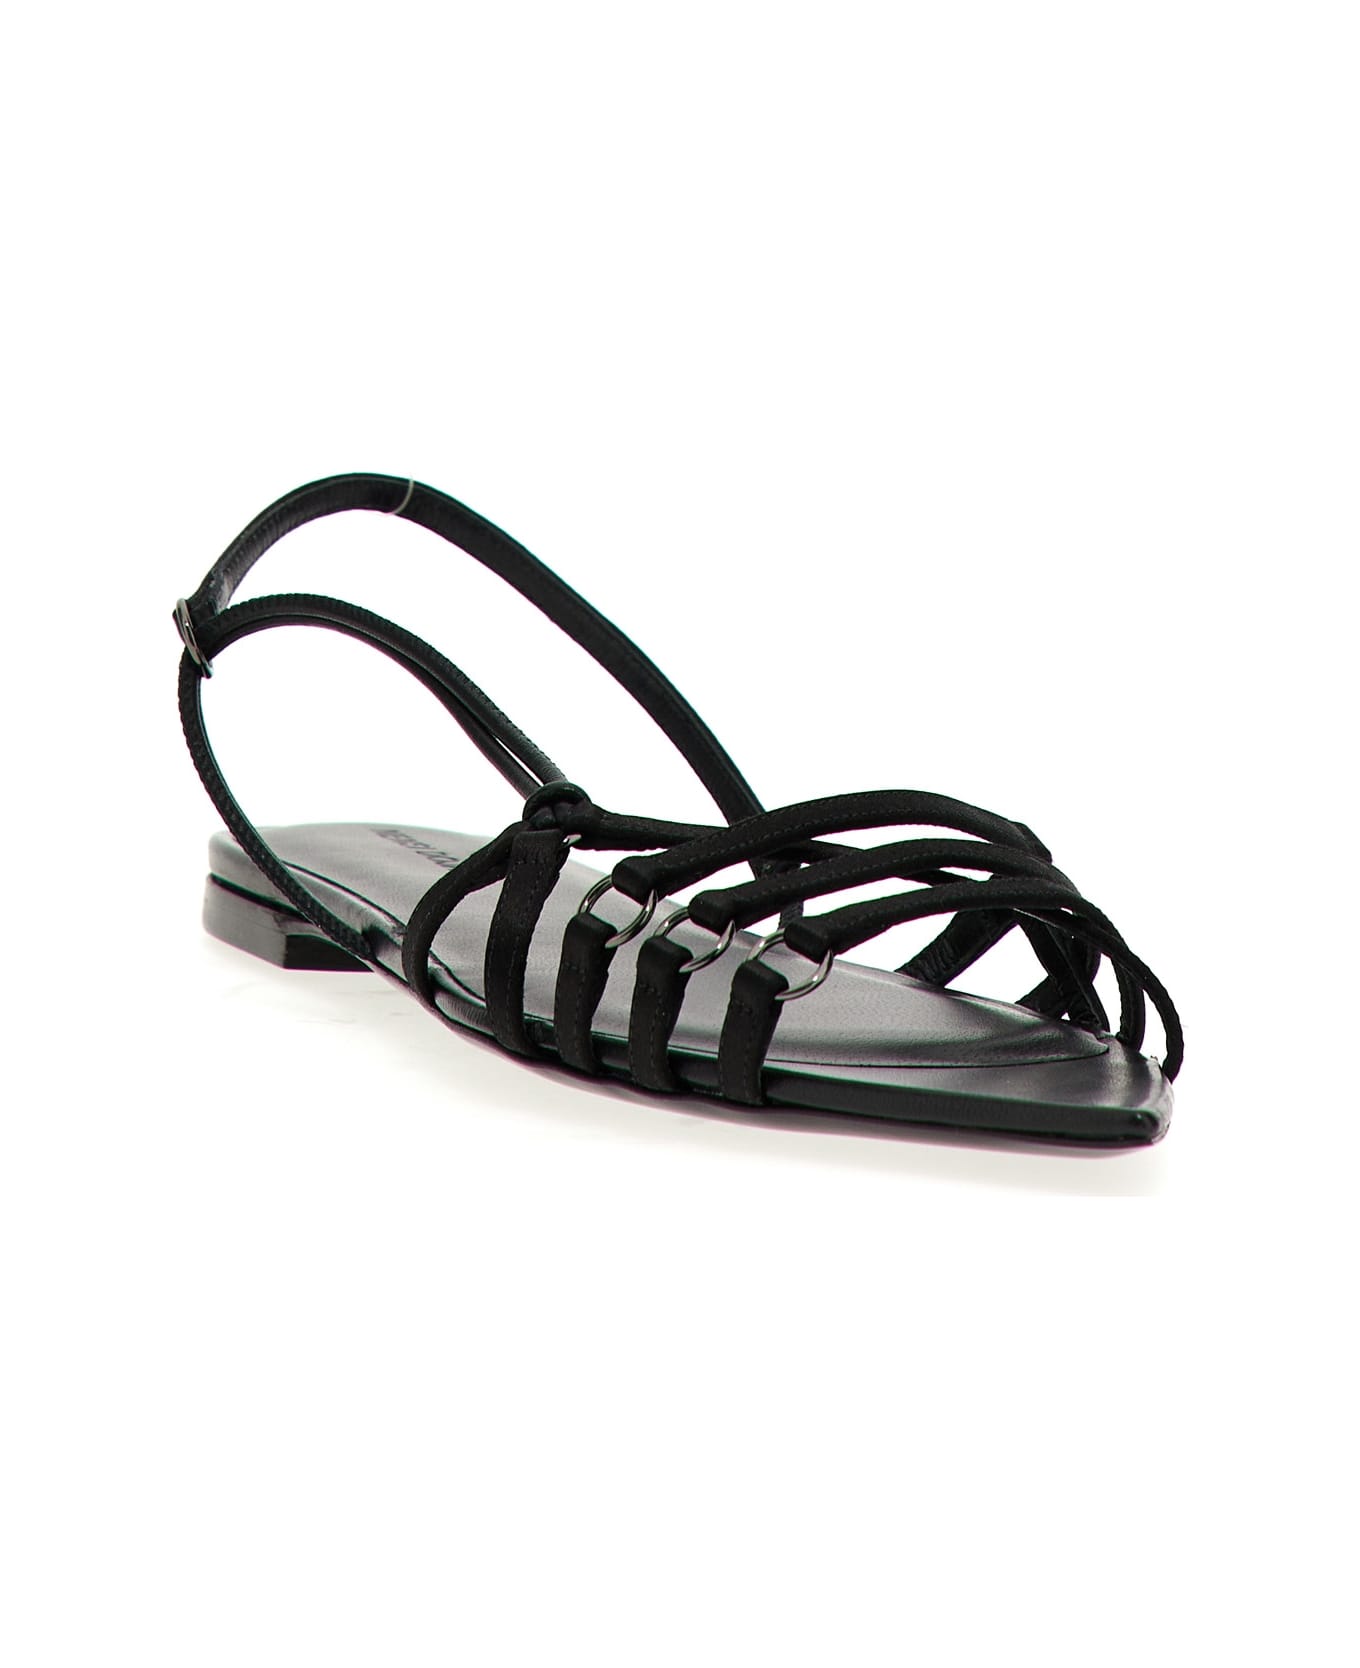 Nensi Dojaka Satin Leather Sandals - Black  